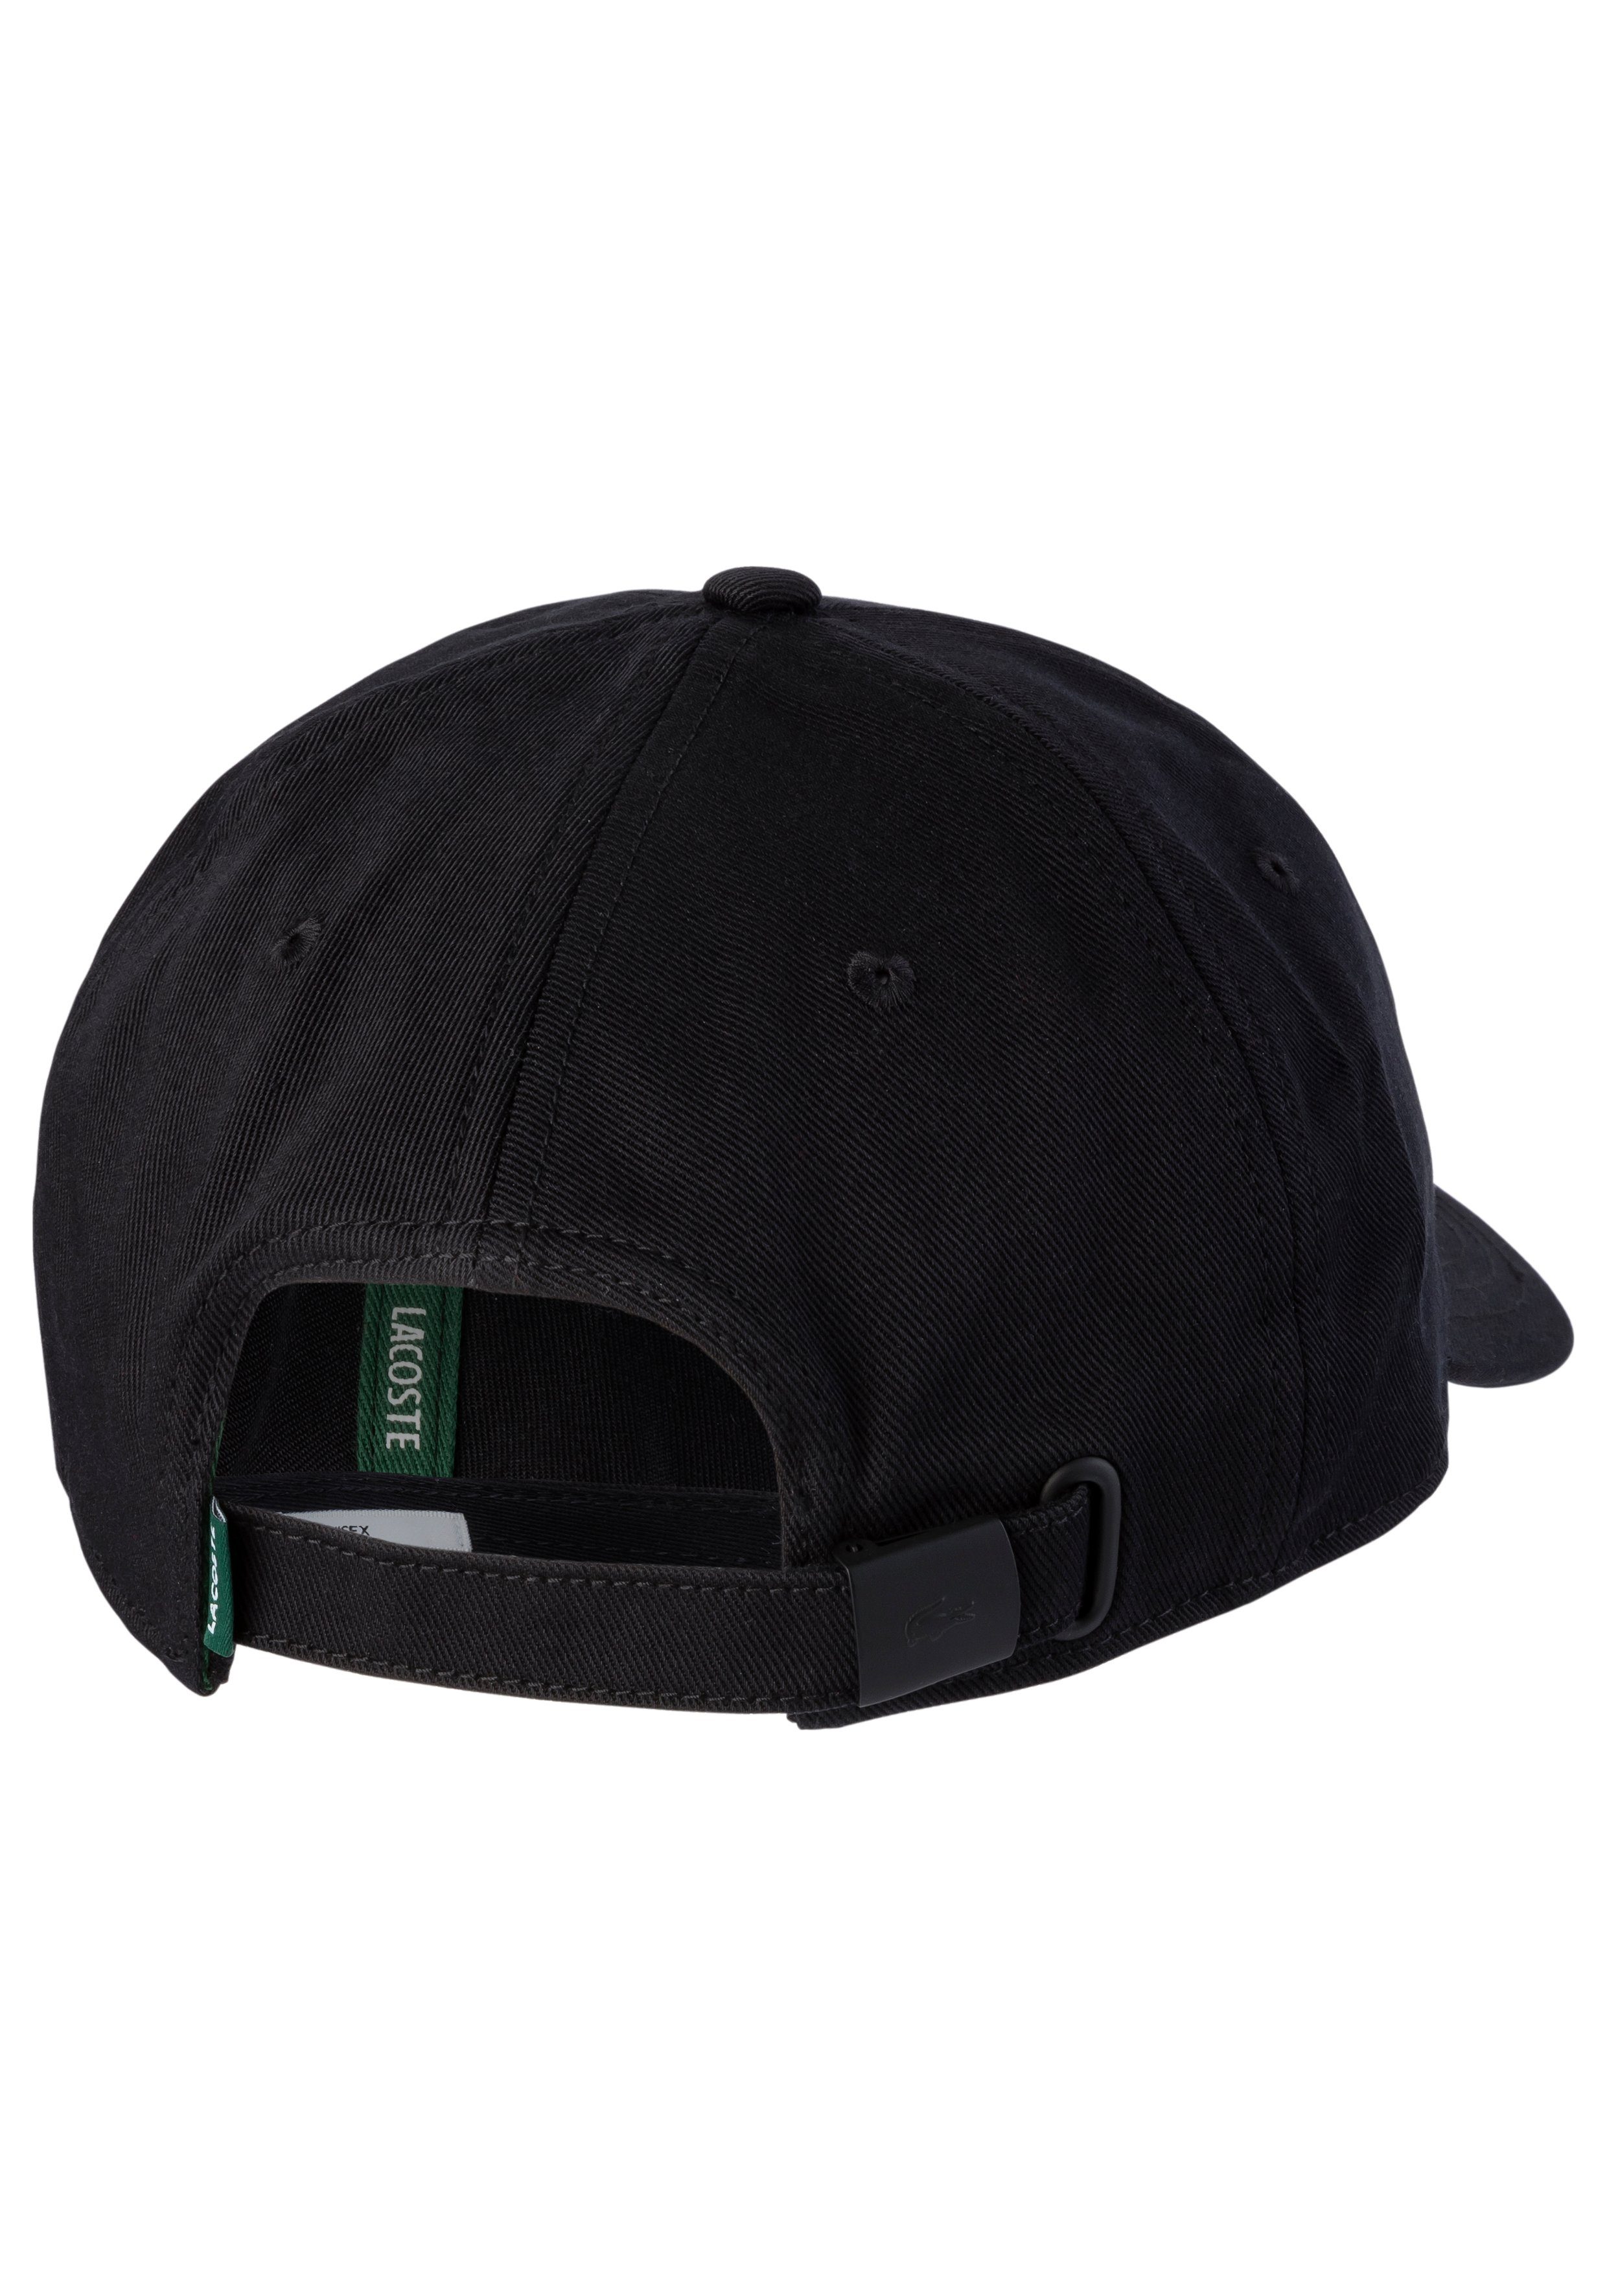 Lacoste Baseball Cap mit XL Logo schwarz